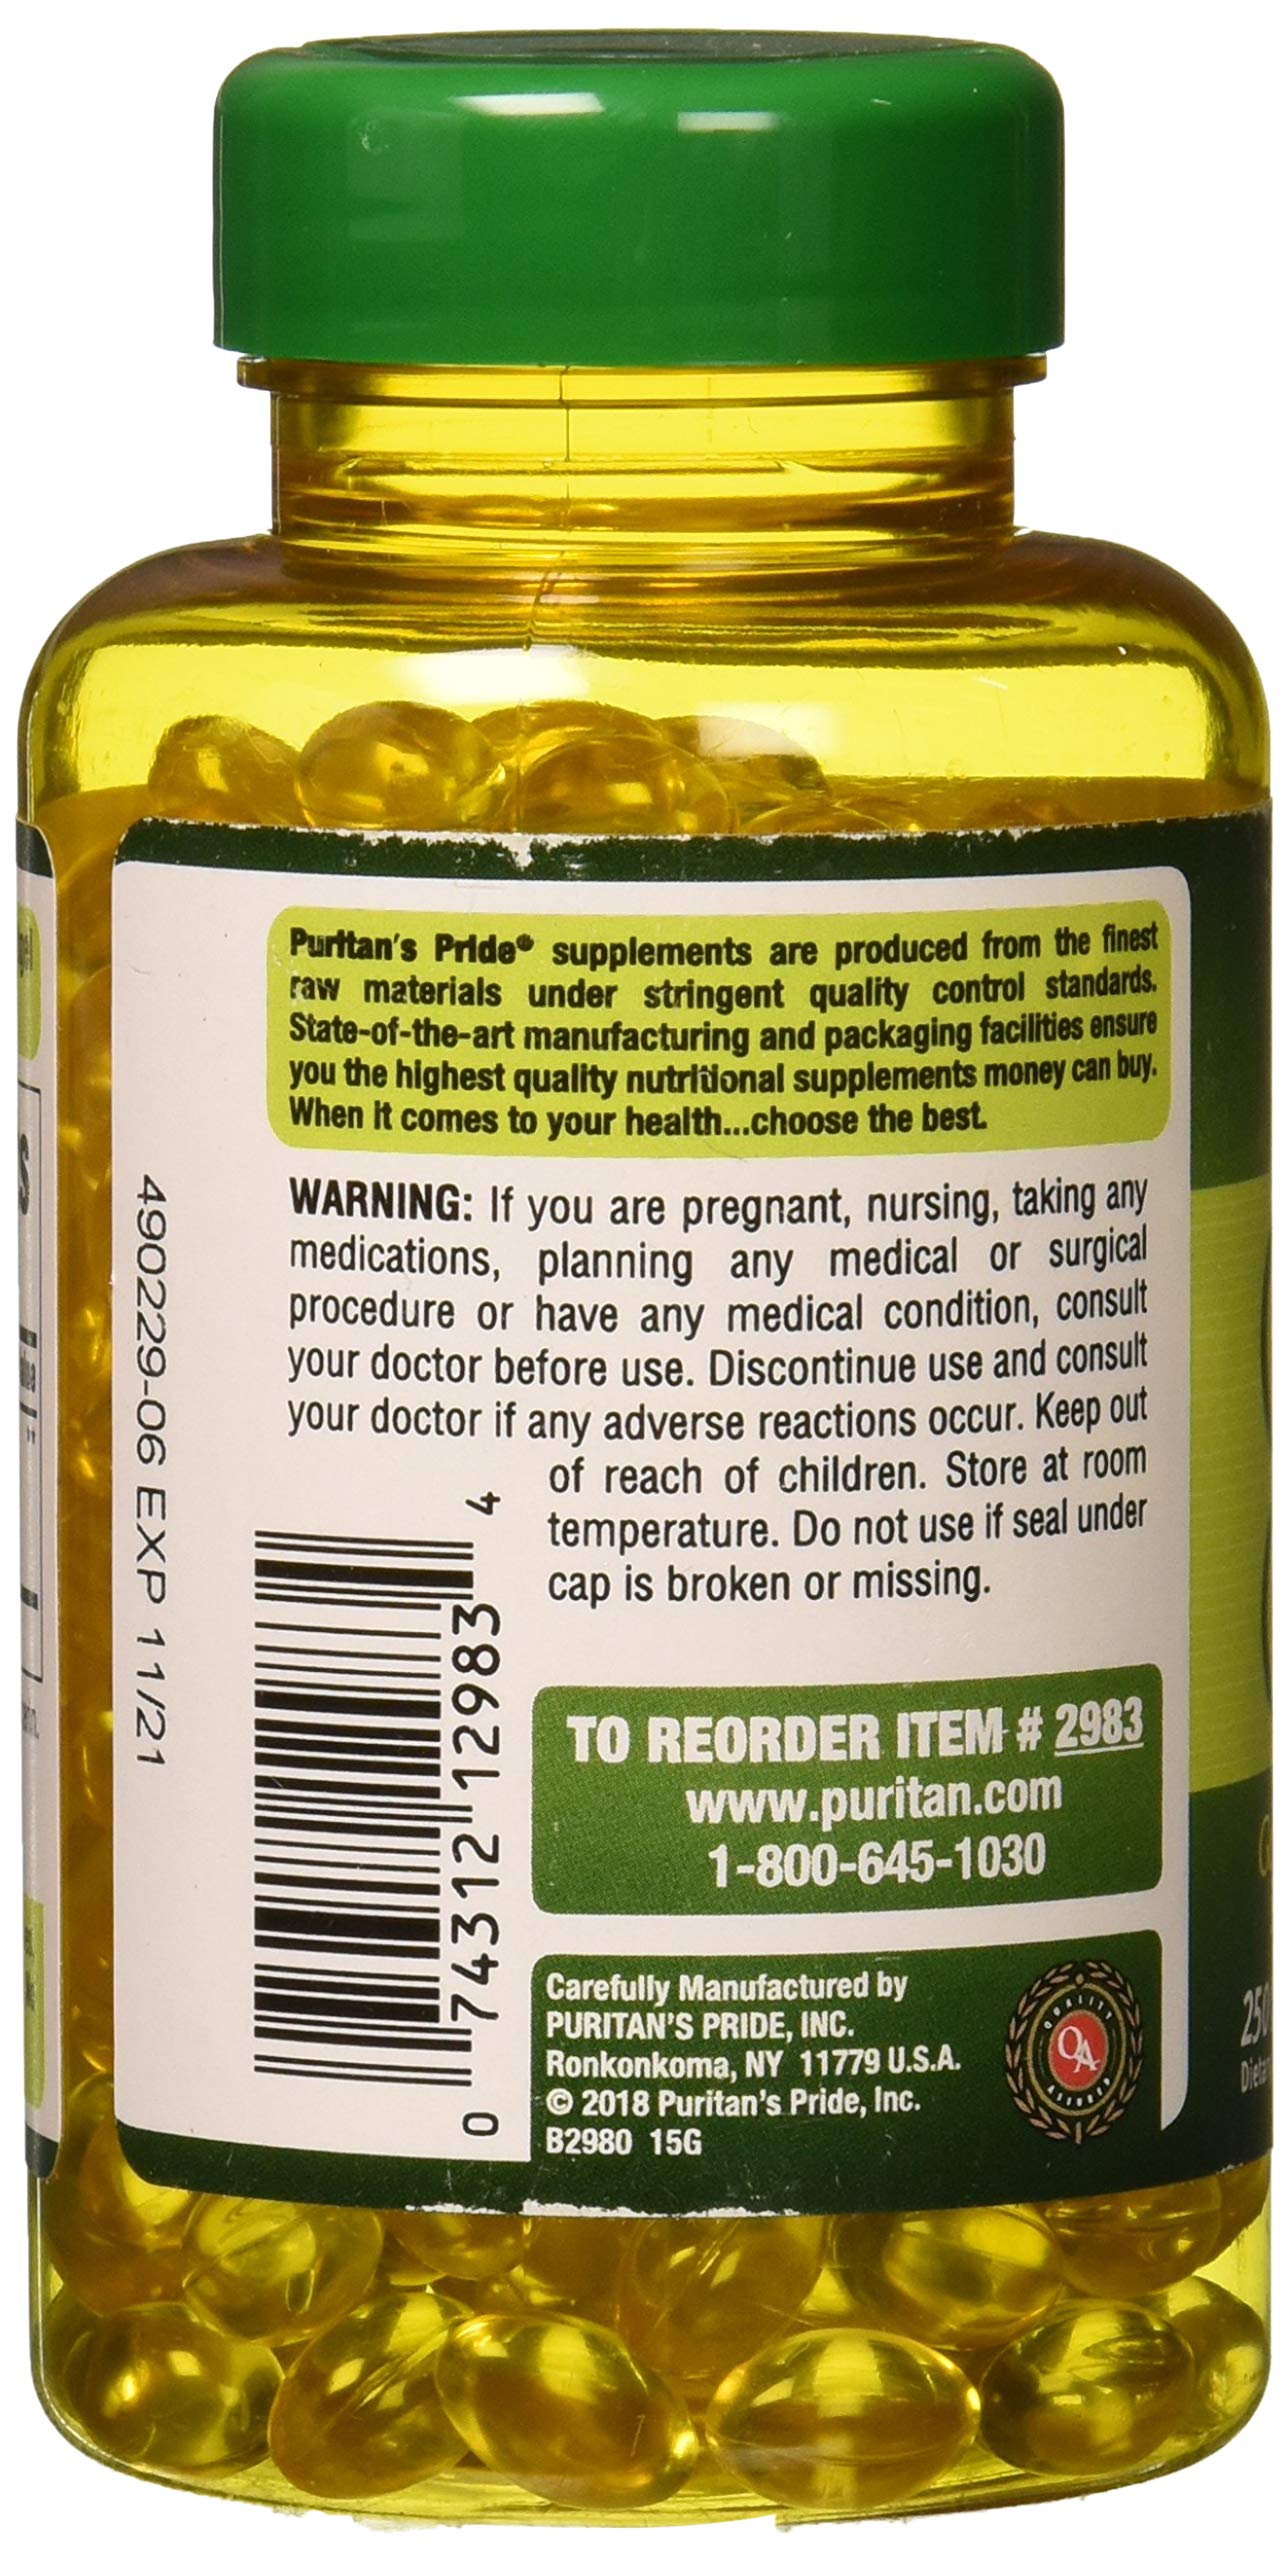 Puritan's Pride Garlic Oil, 5000 Mg, 250 Count